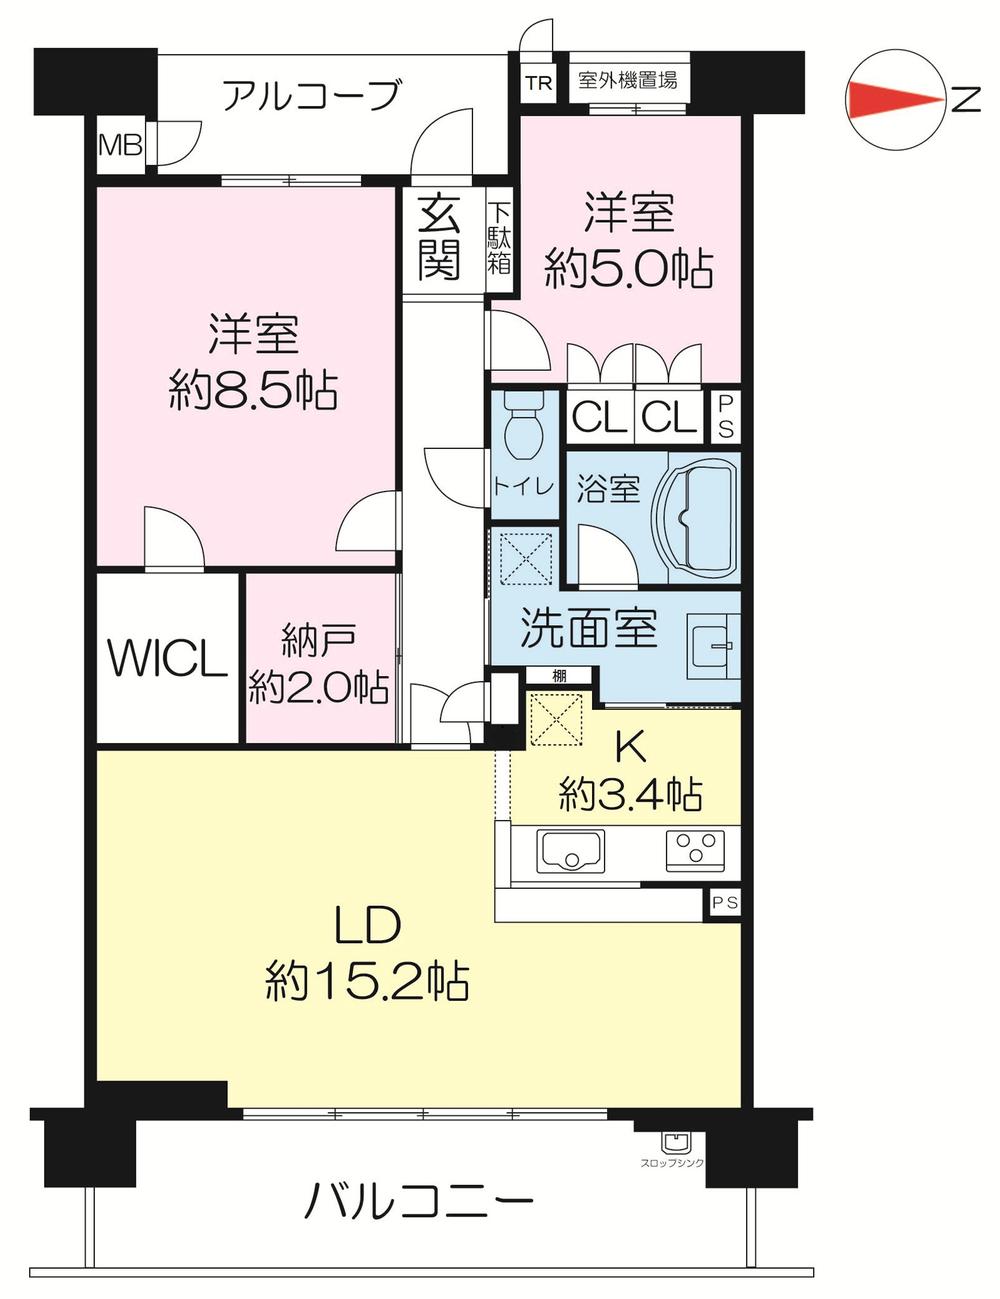 Floor plan. 2LDK + S (storeroom), Price 33,800,000 yen, Occupied area 75.98 sq m , Balcony area 12.96 sq m